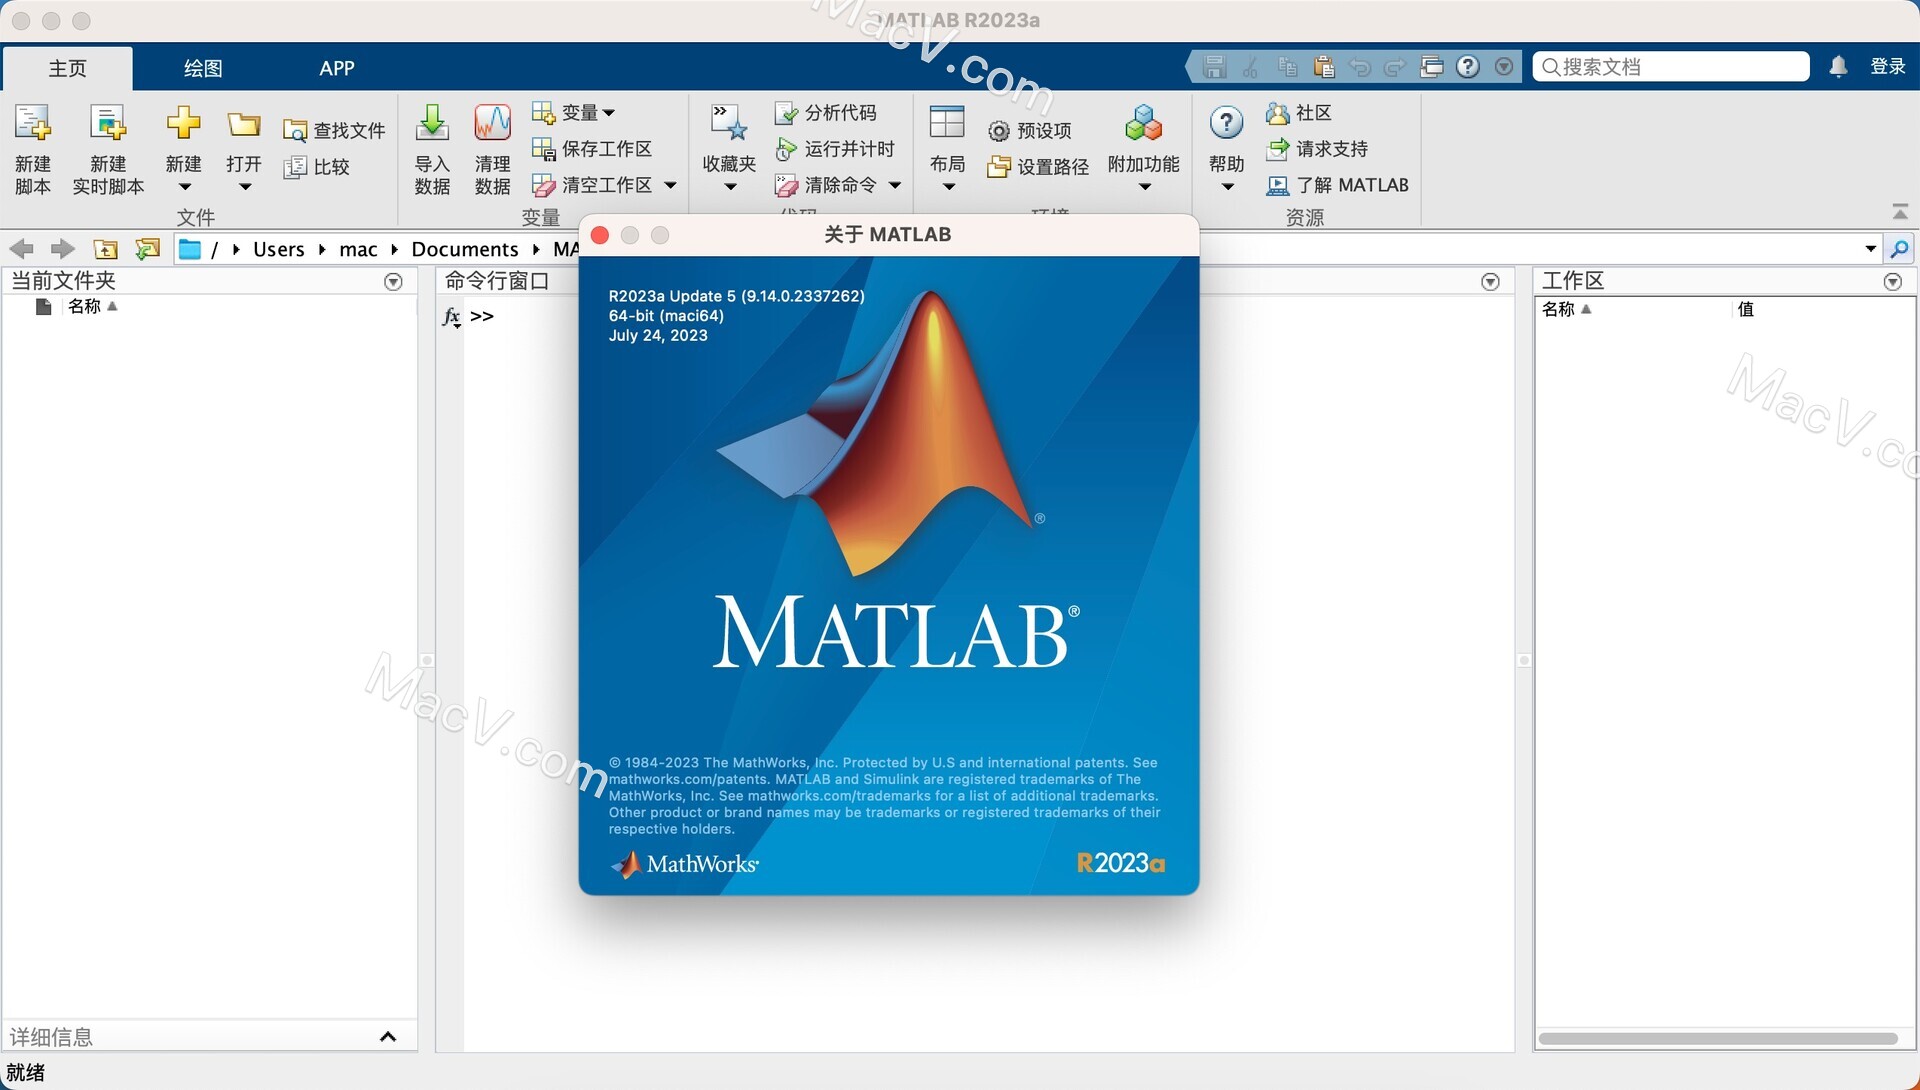 download MathWorks MATLAB R2023a 9.14.0.2337262